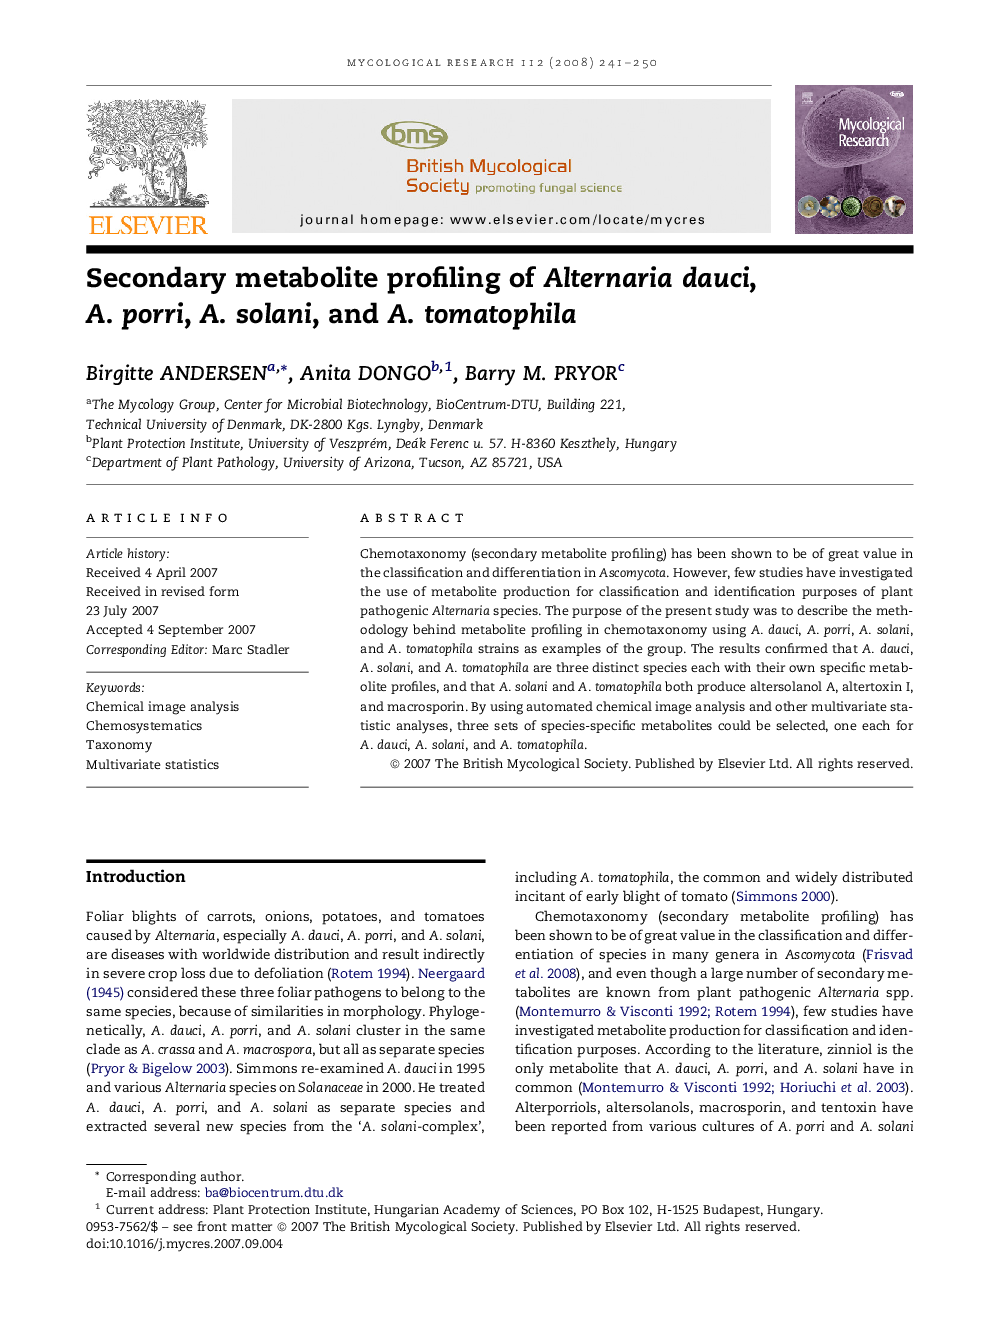 Secondary metabolite profiling of Alternaria dauci, A. porri, A. solani, and A. tomatophila